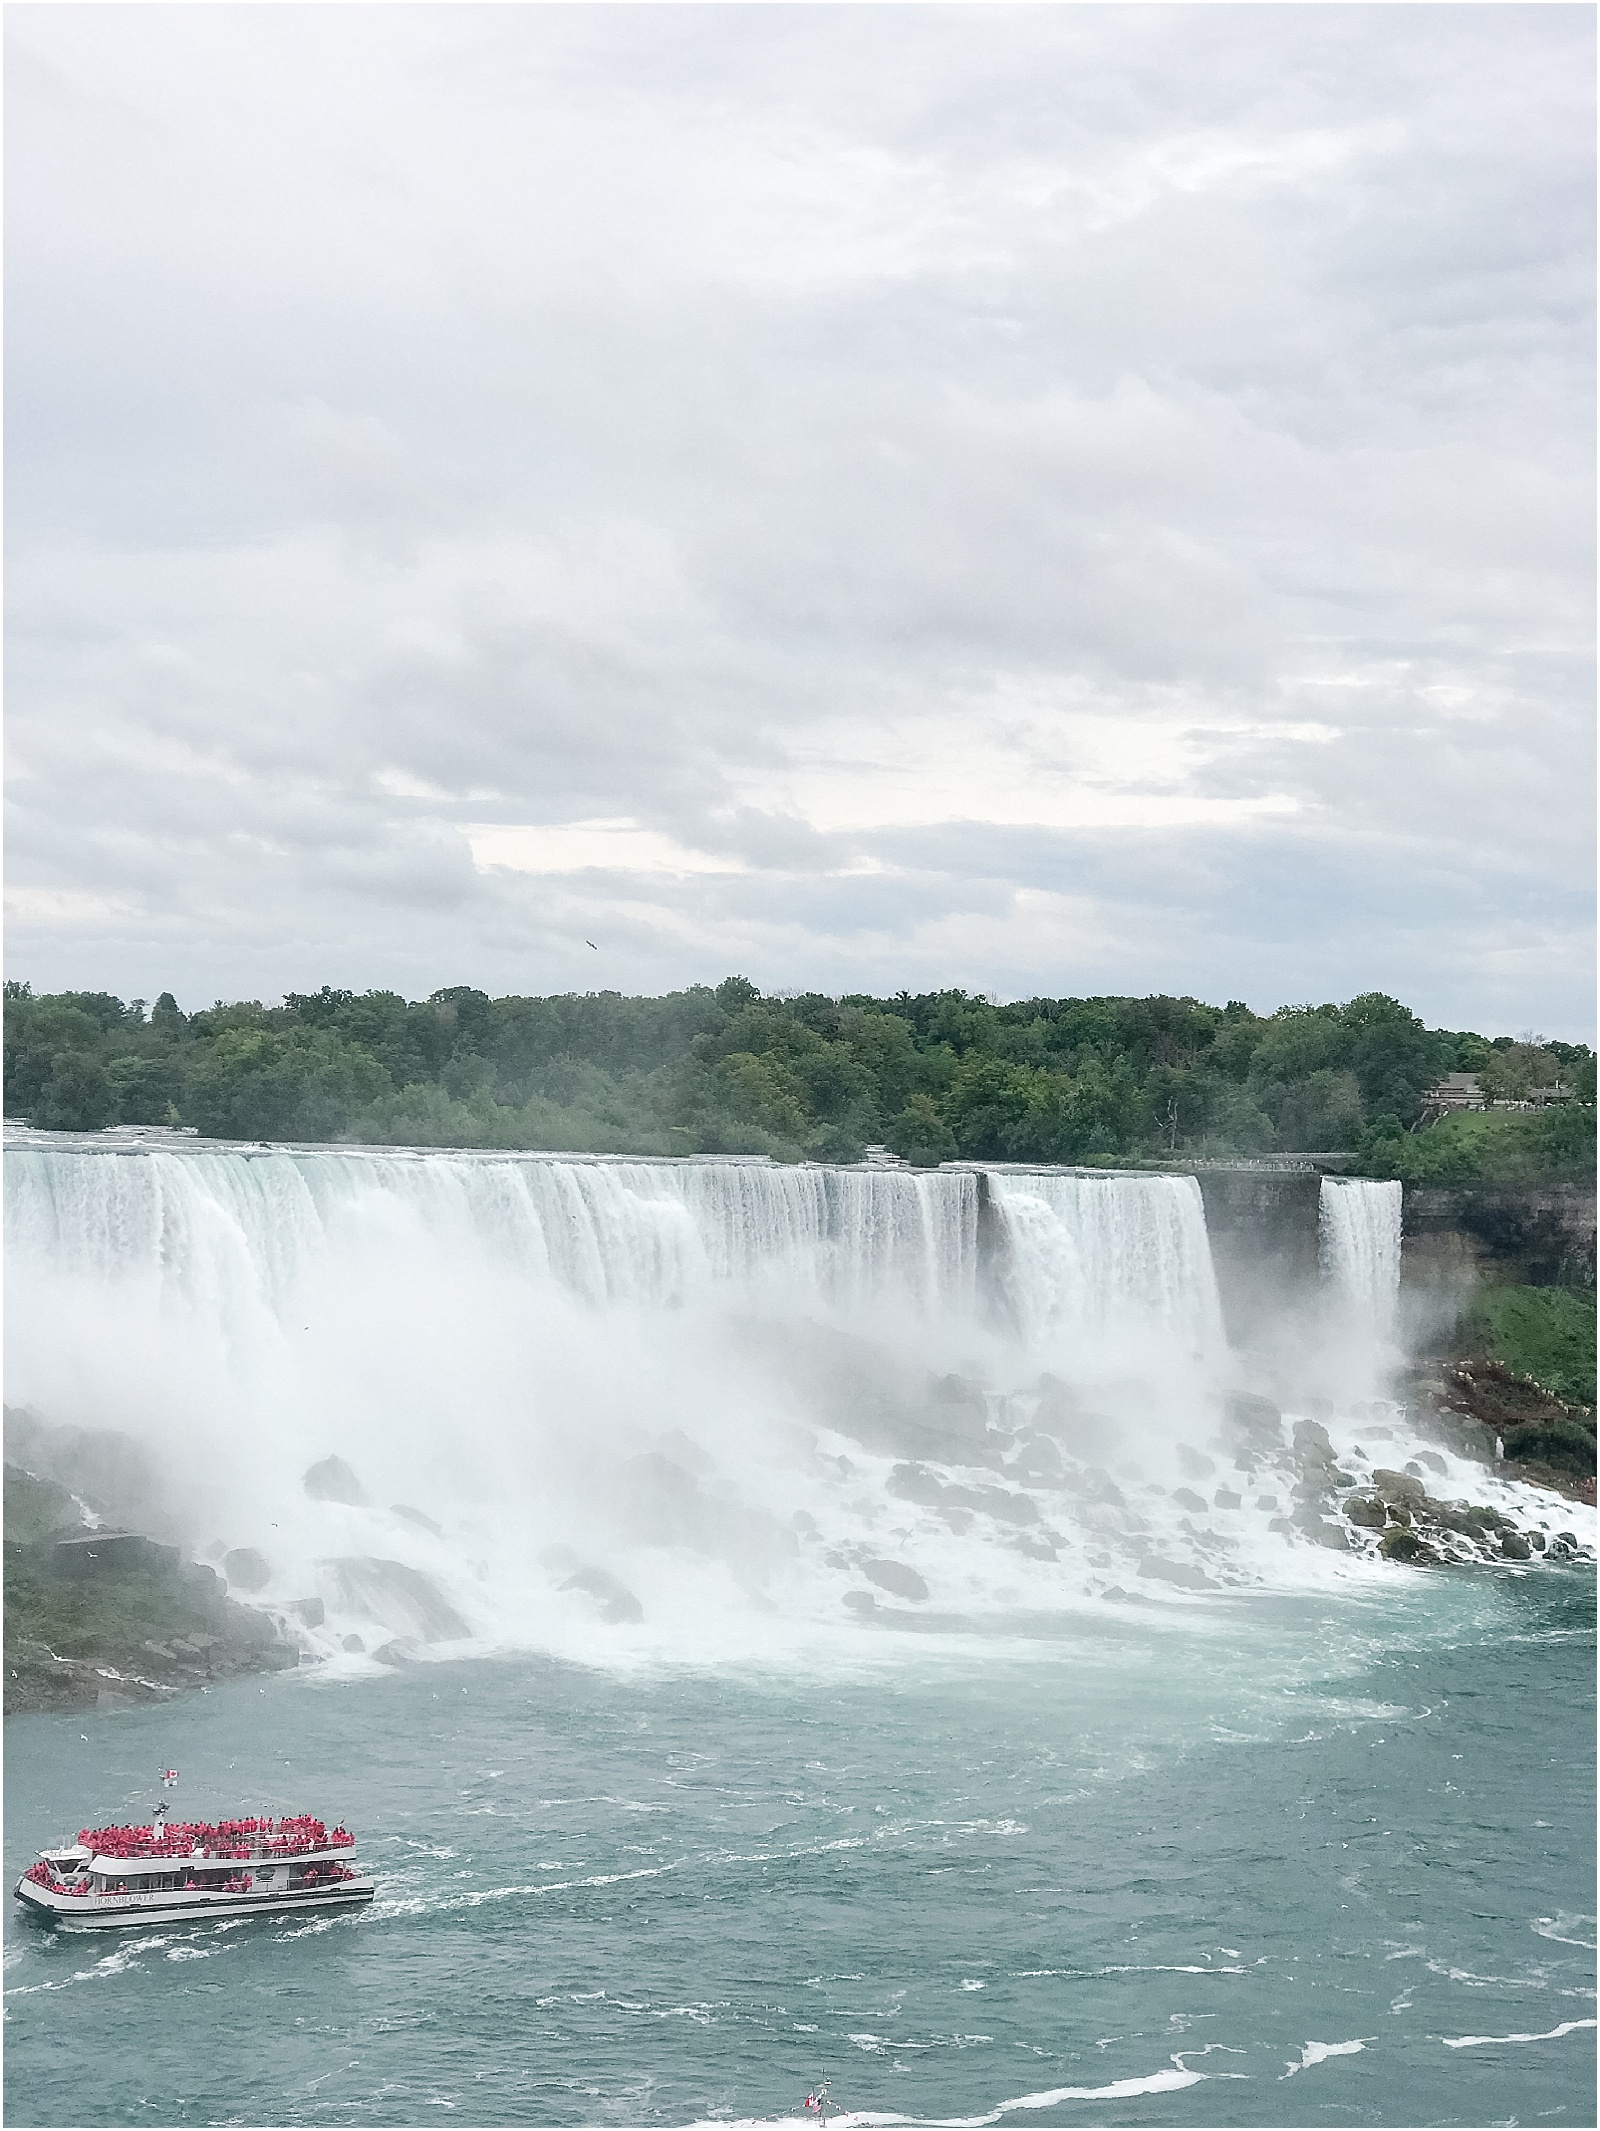 Niagara Falls, the United States side